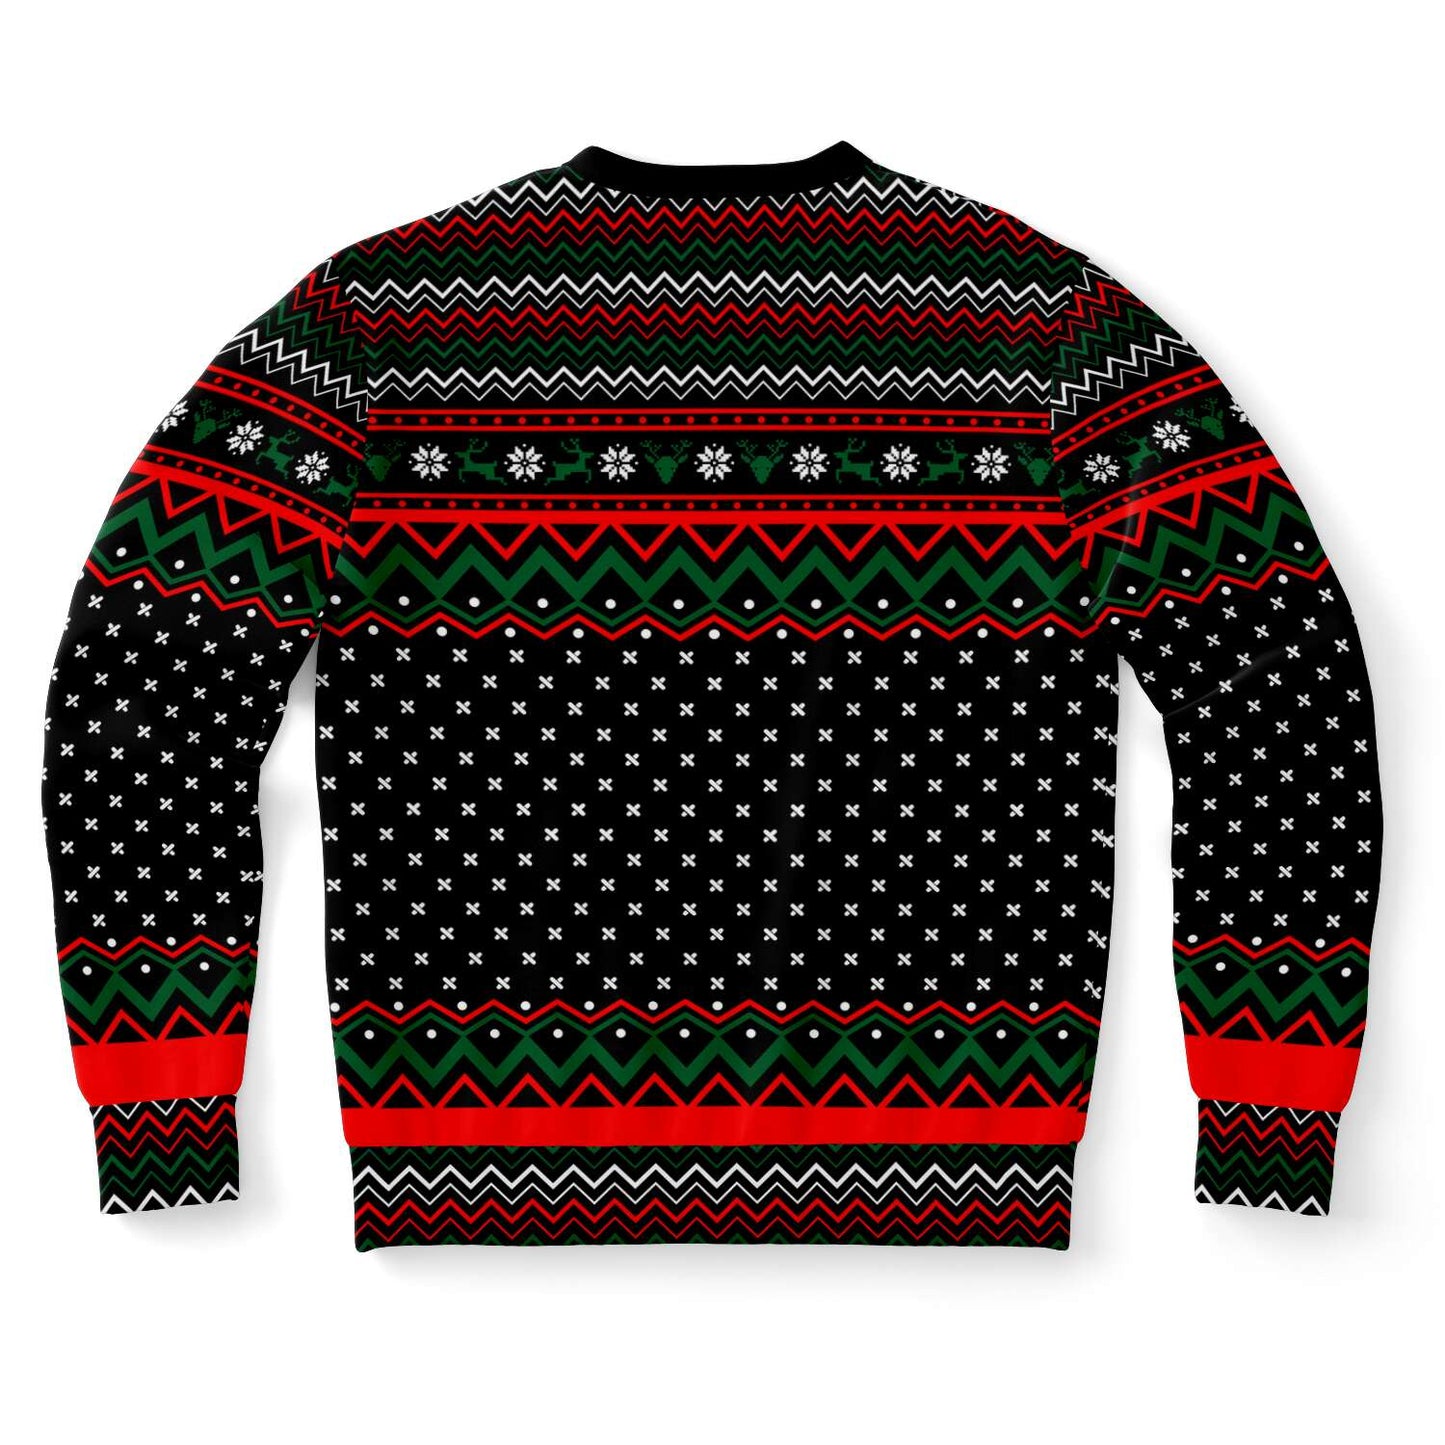 Ugly Christmas Sweater No Offense Santa, but I Deliver all Year Long - Chloe Lambertin